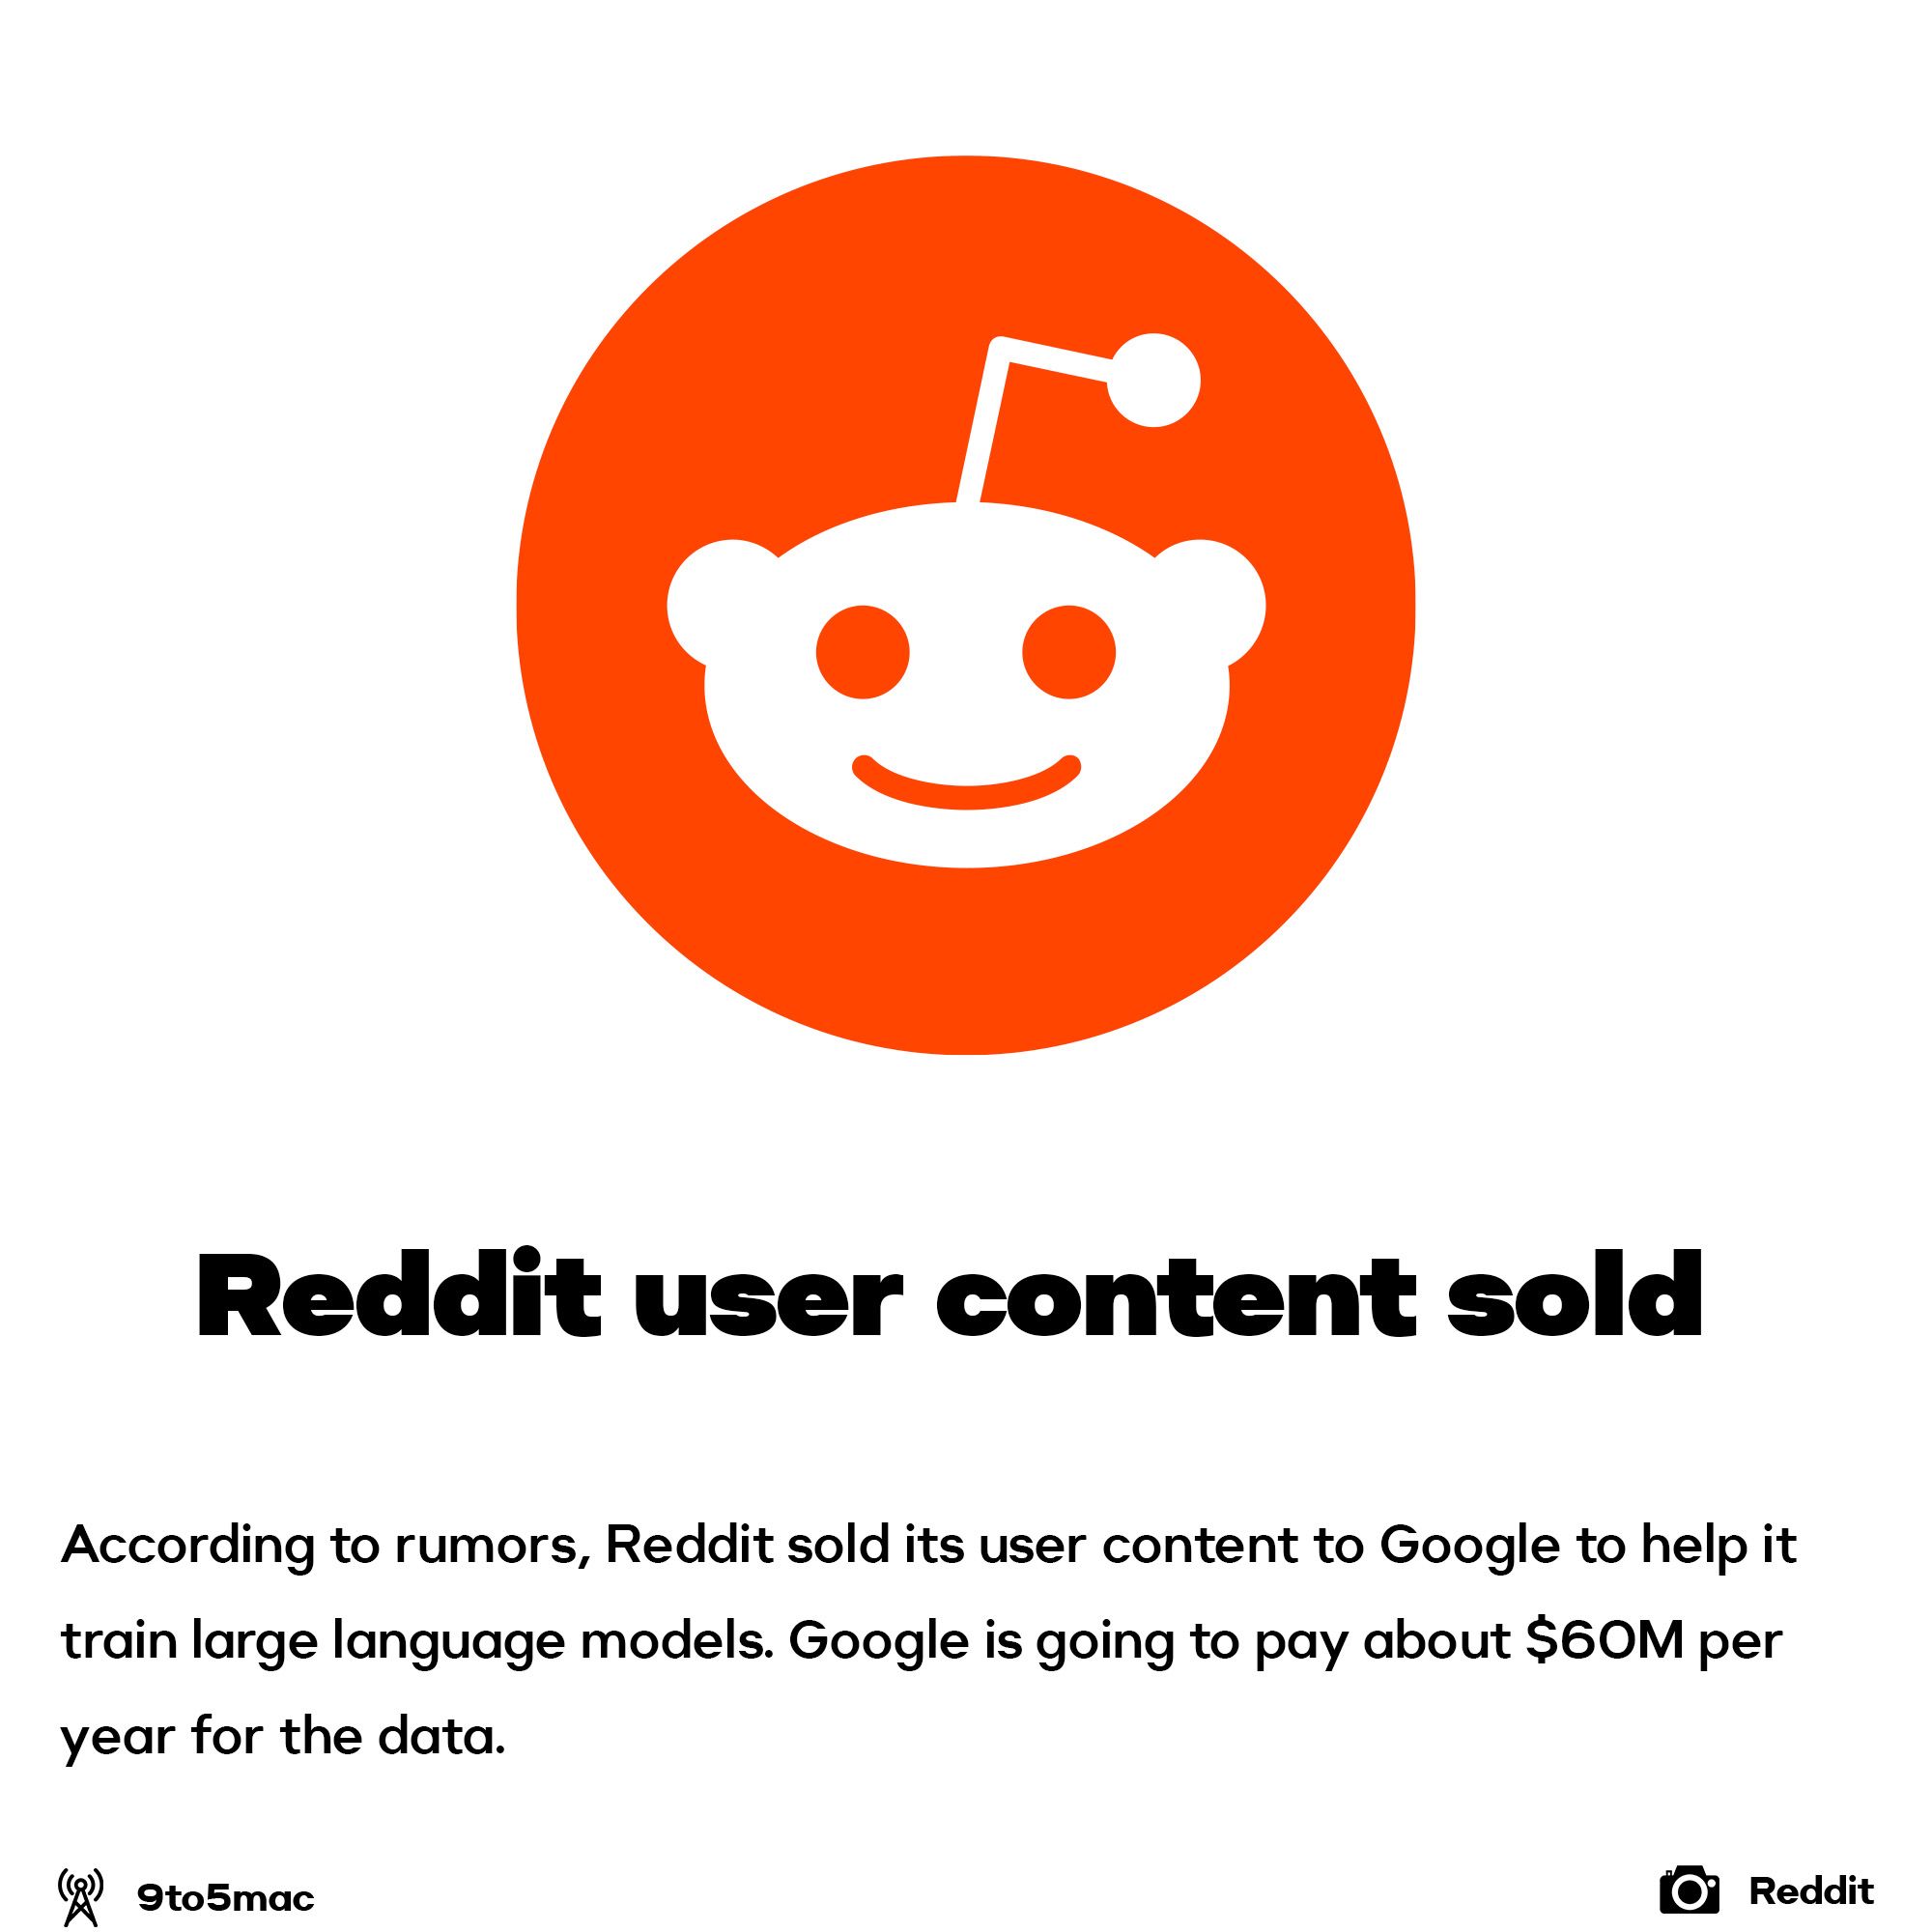 Reddit sold its data to Google